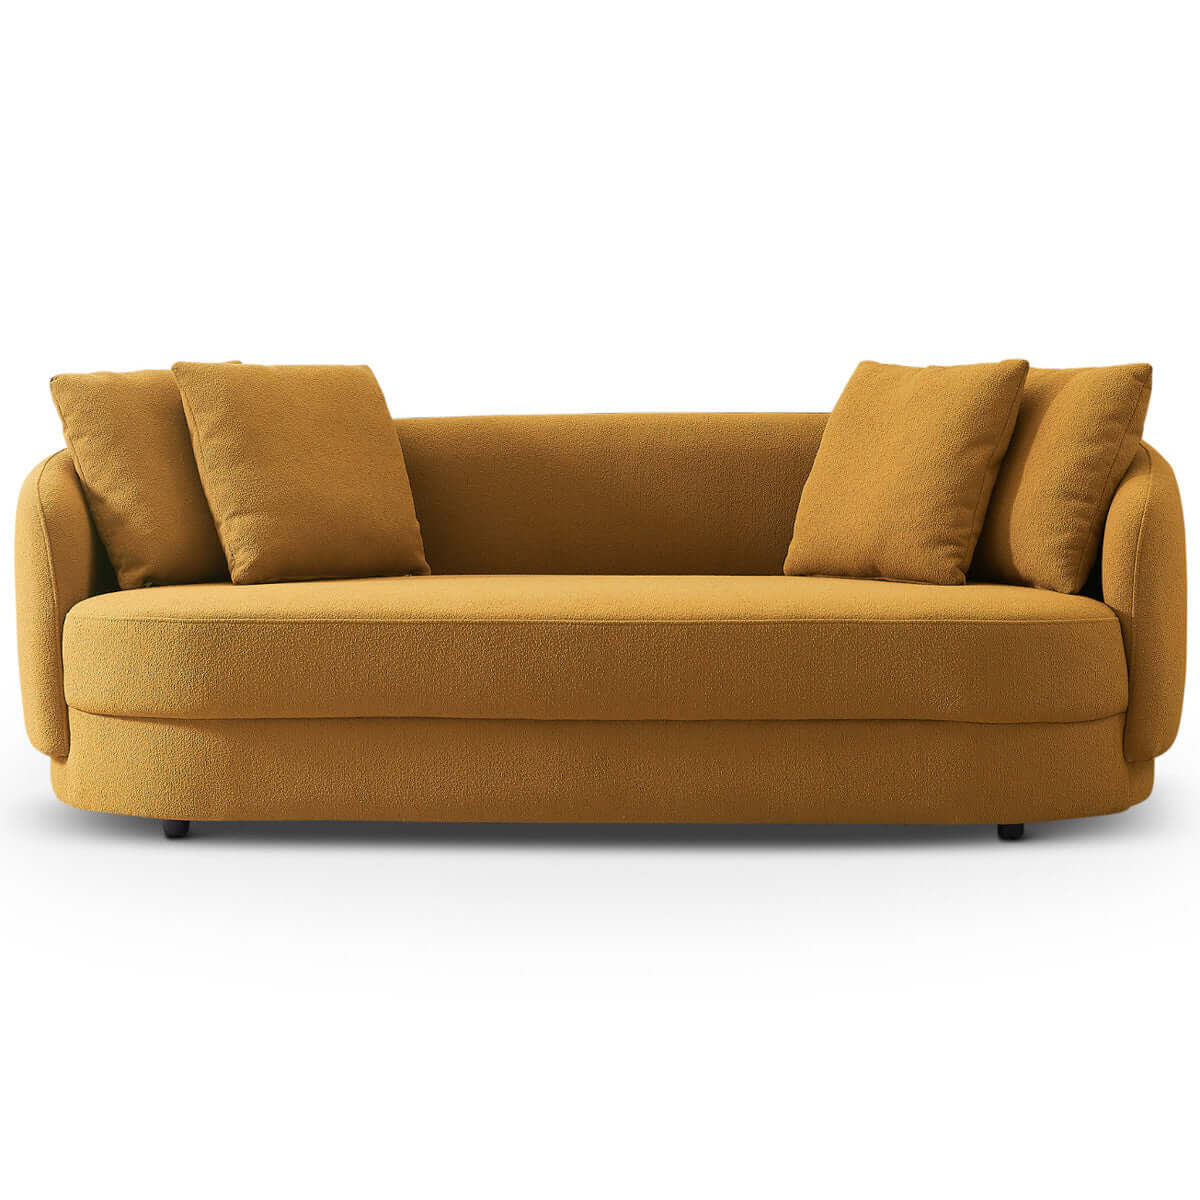 Velvet yellow sofa